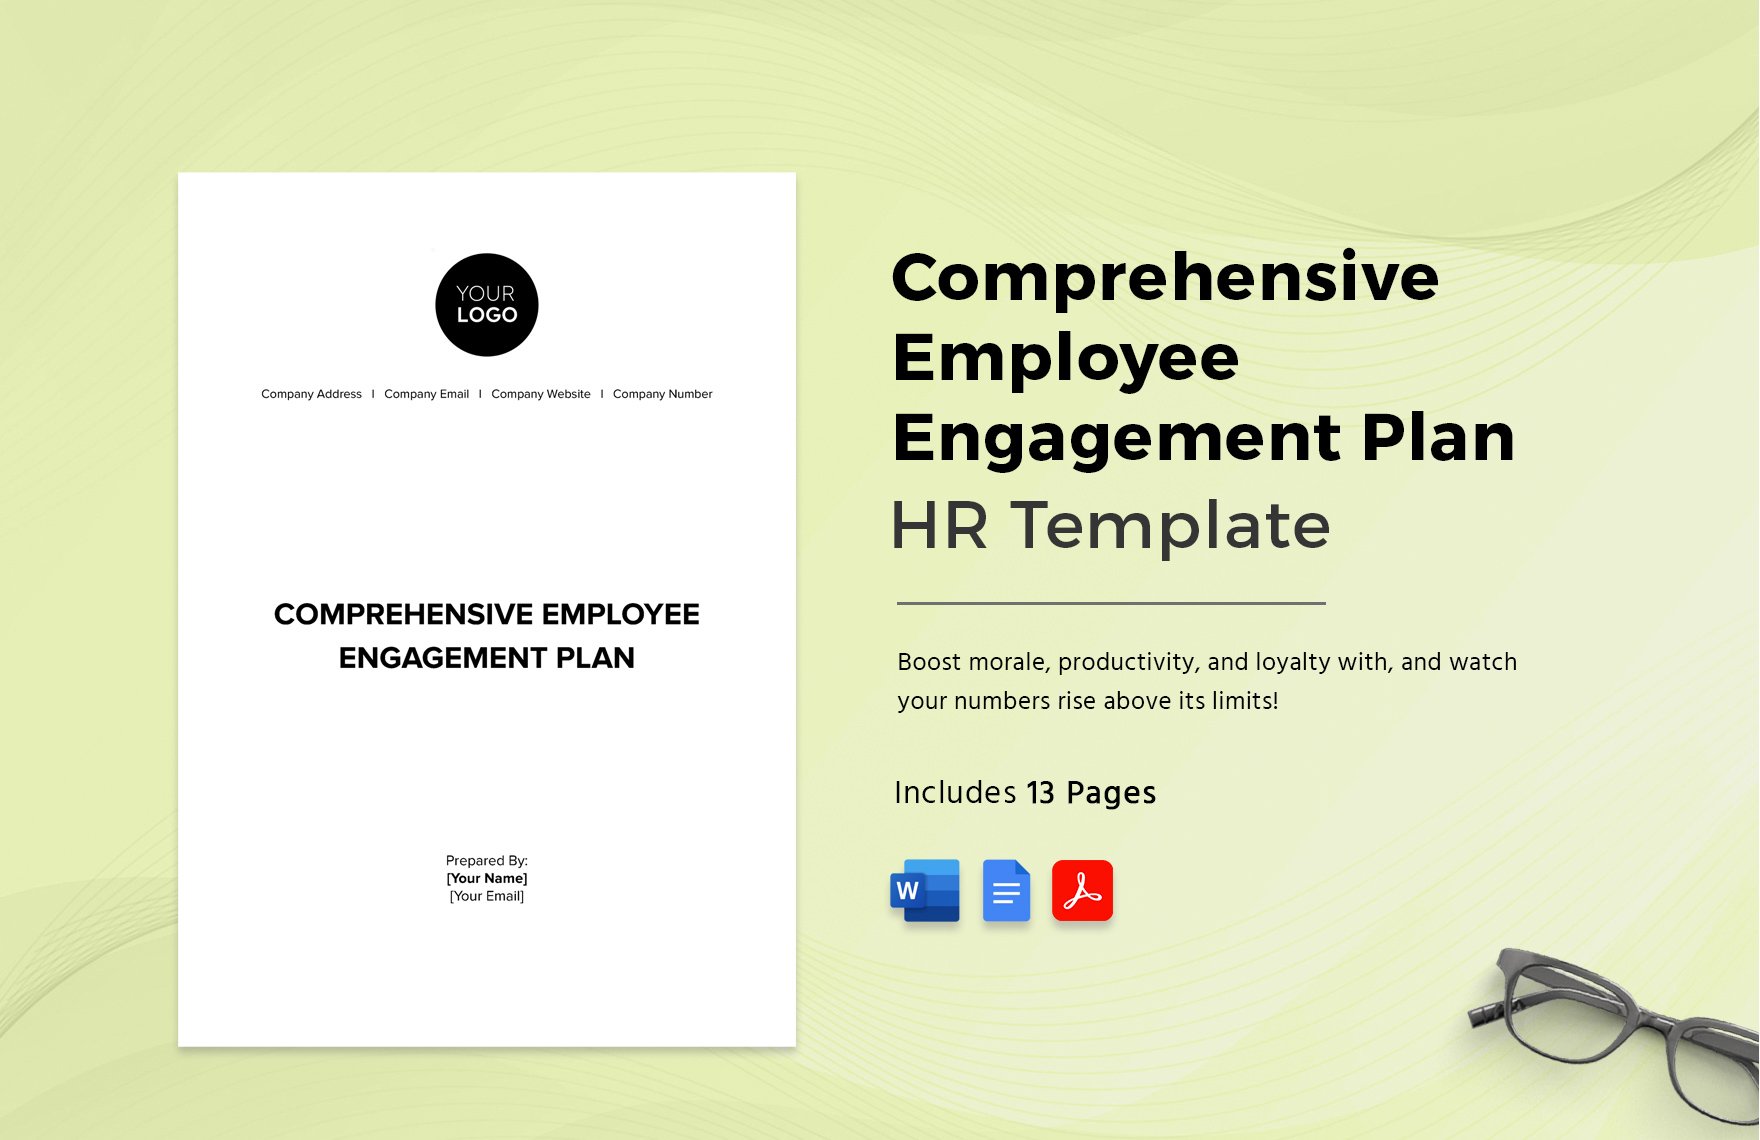 Comprehensive Employee Engagement Plan HR Template in Word, Google Docs, PDF